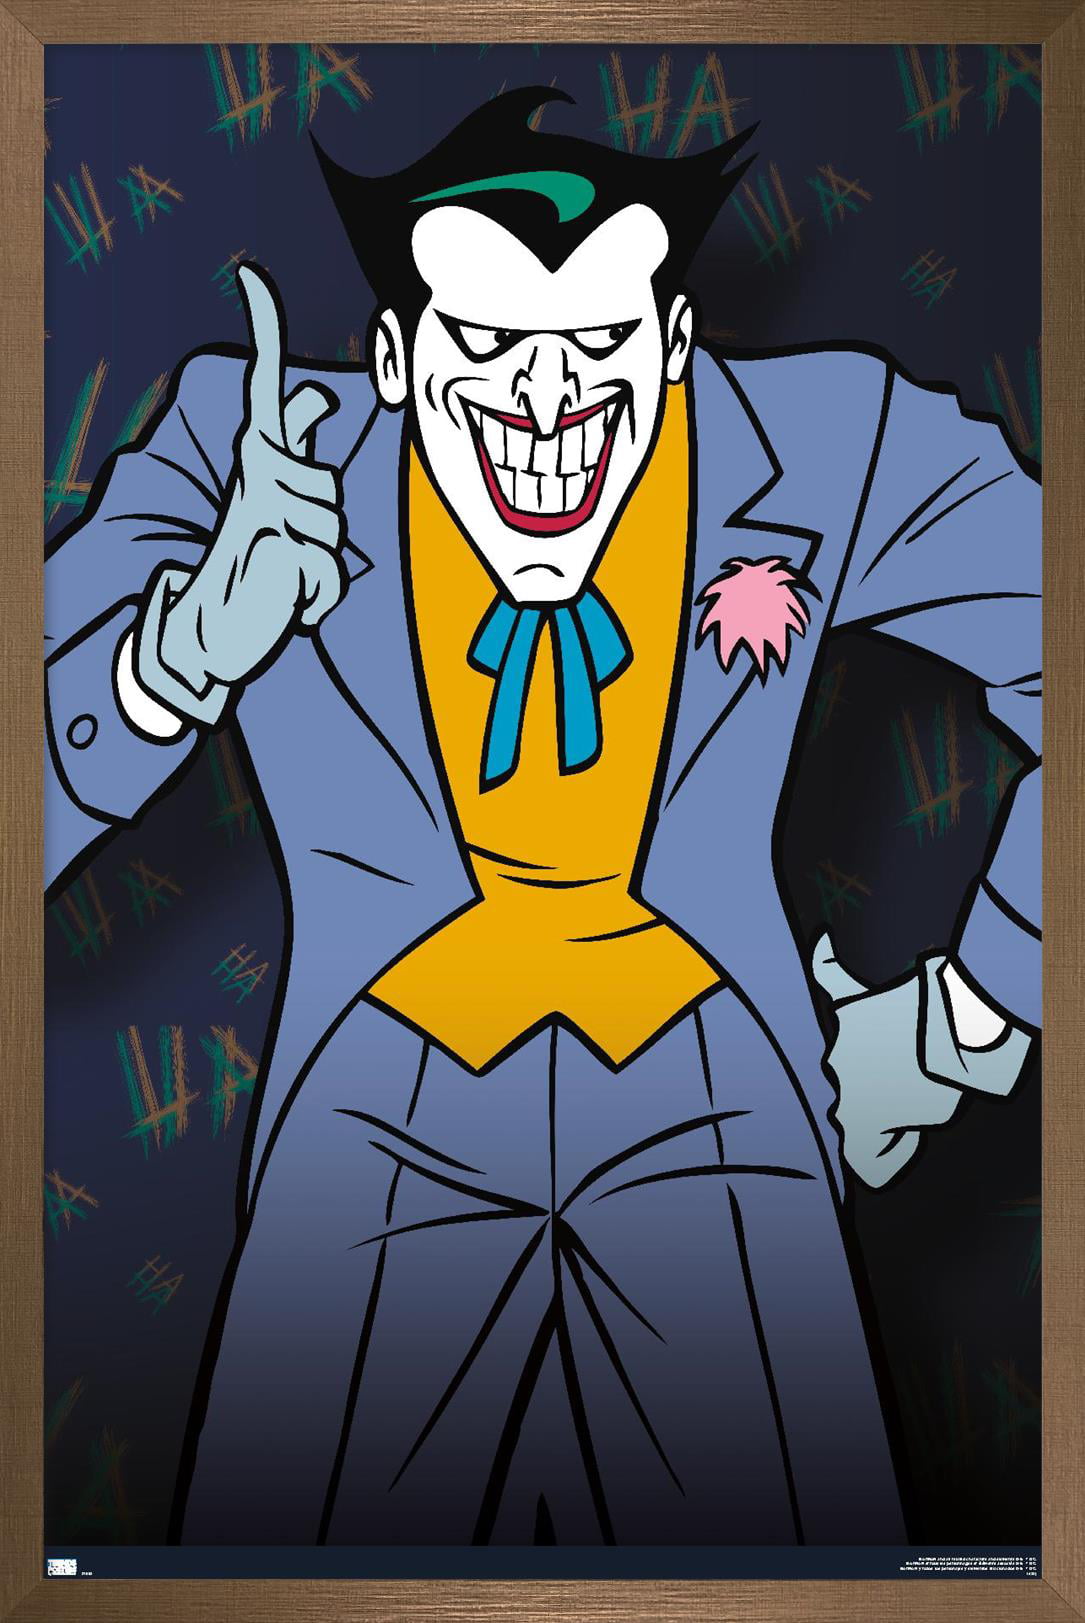 Joker Movie Poster with Frame - Joker Framed Posters for Home and